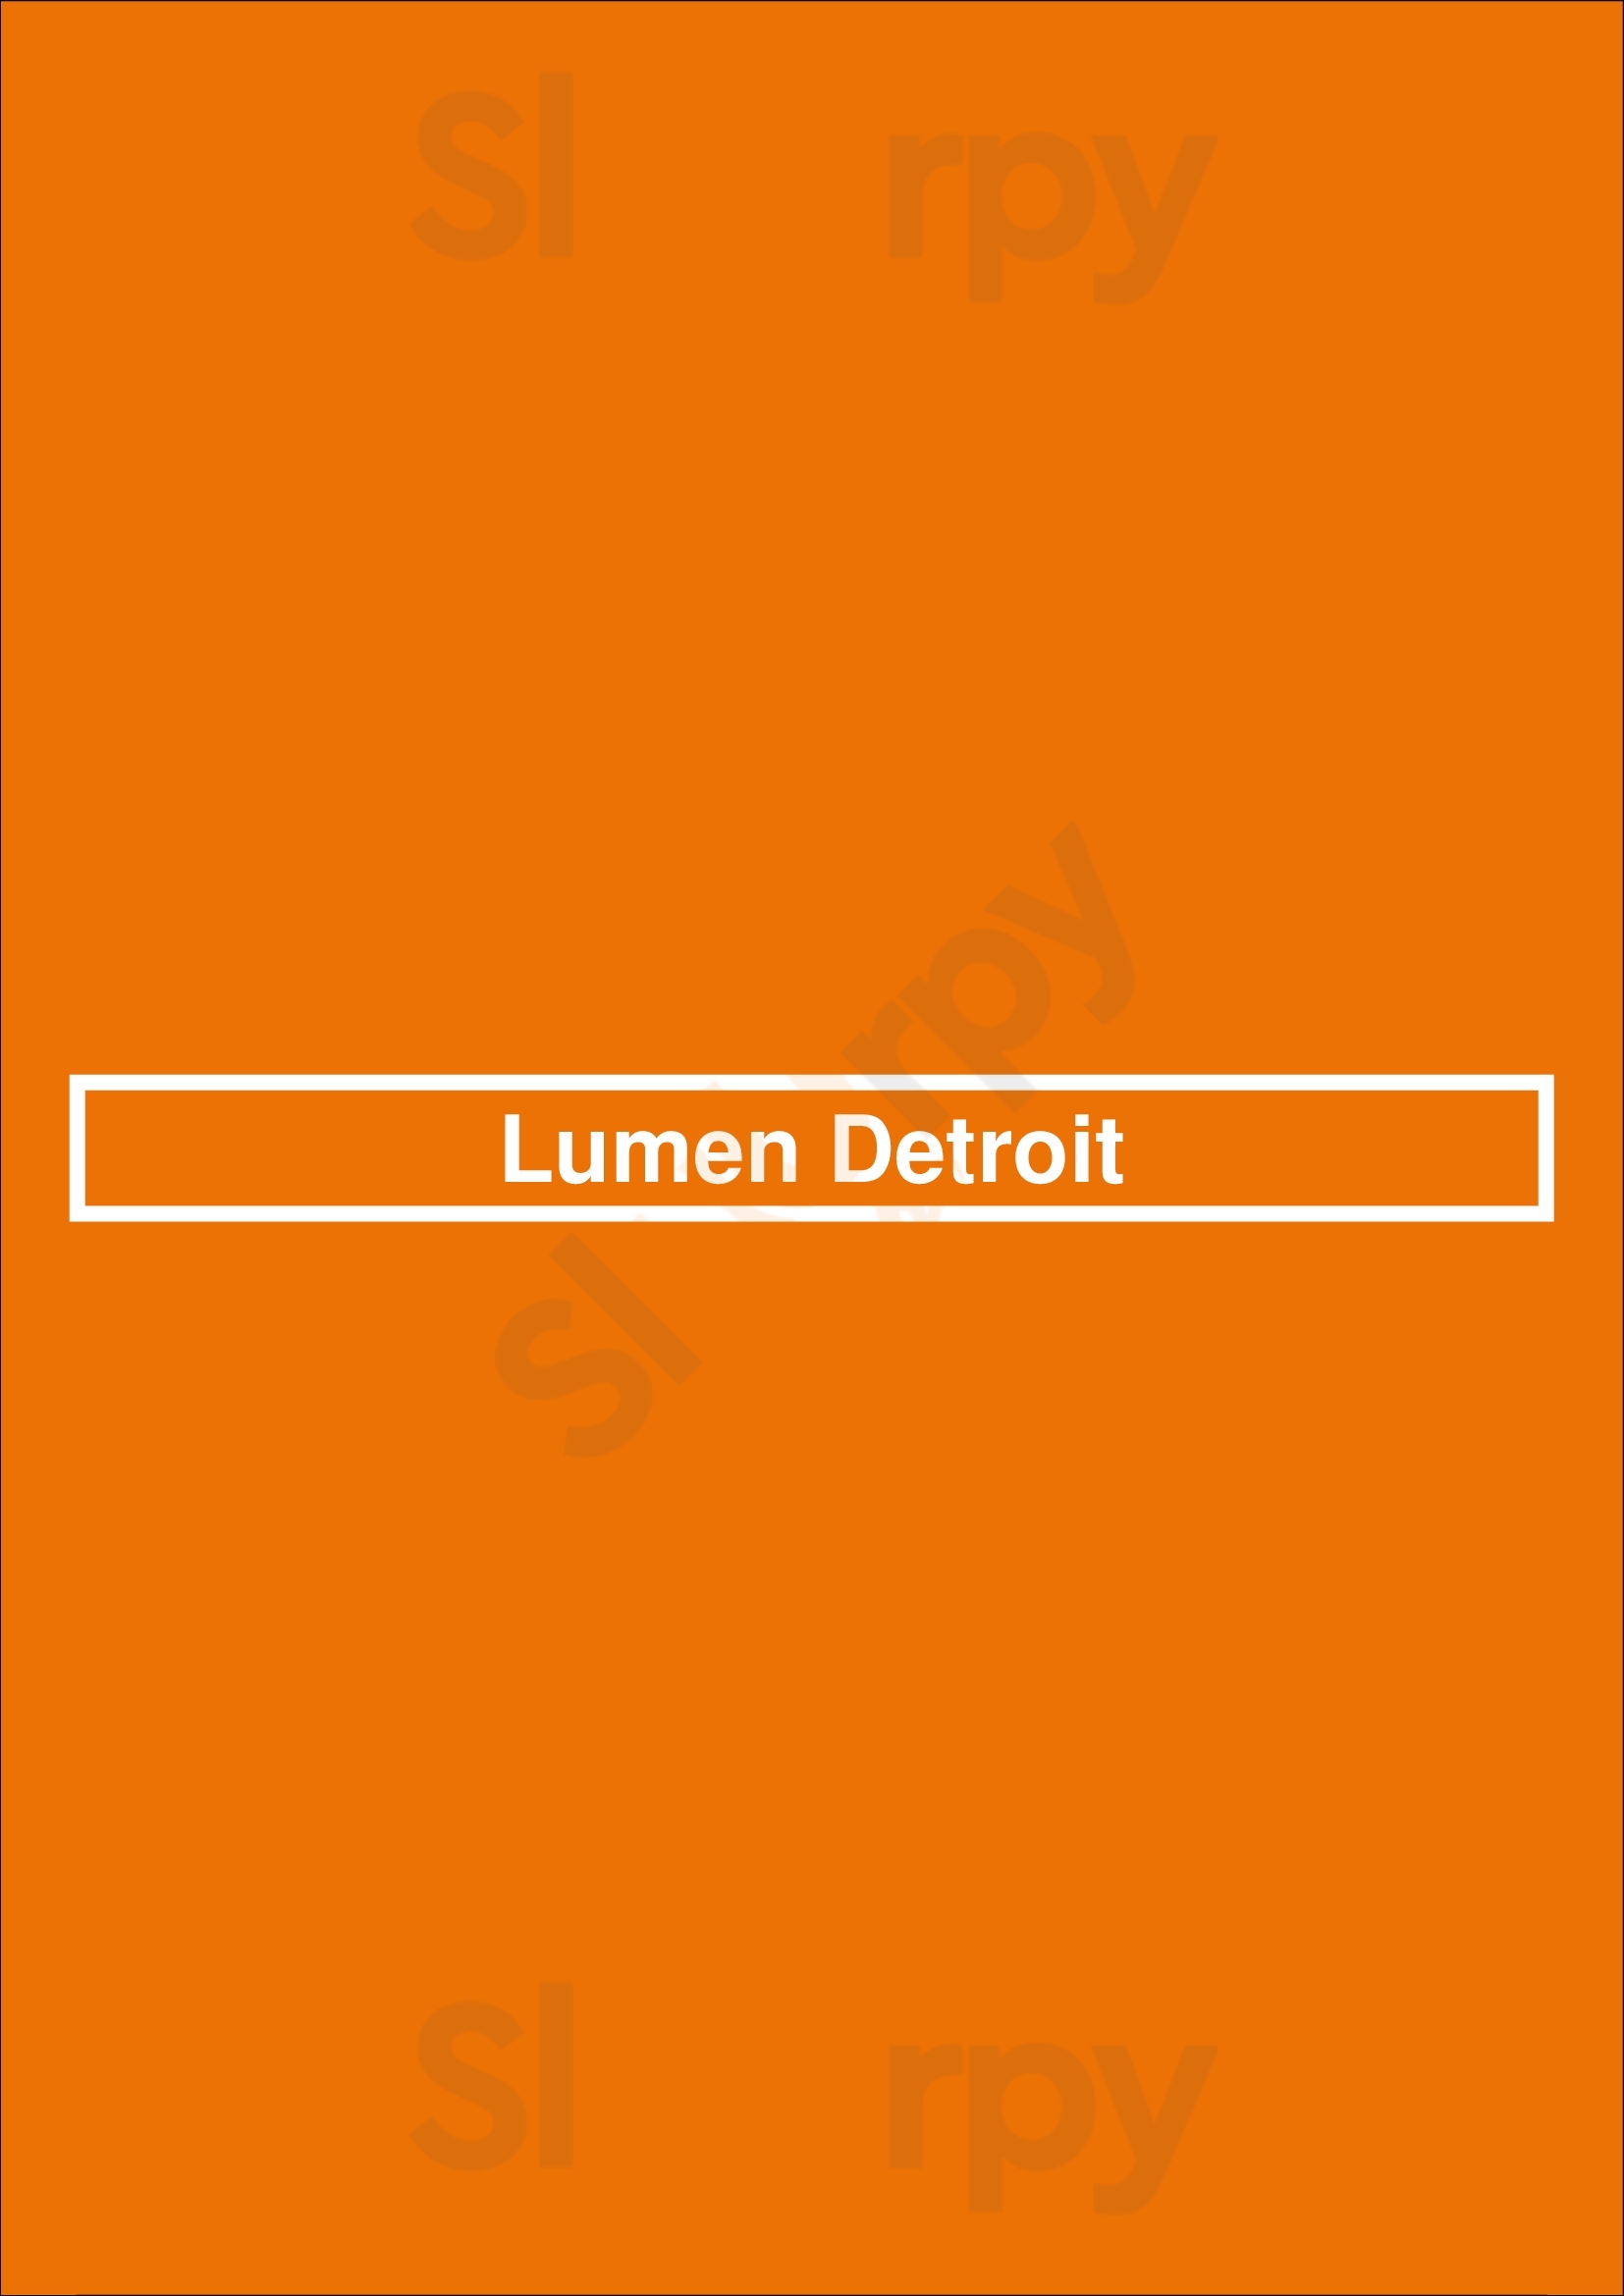 Lumen Detroit Detroit Menu - 1